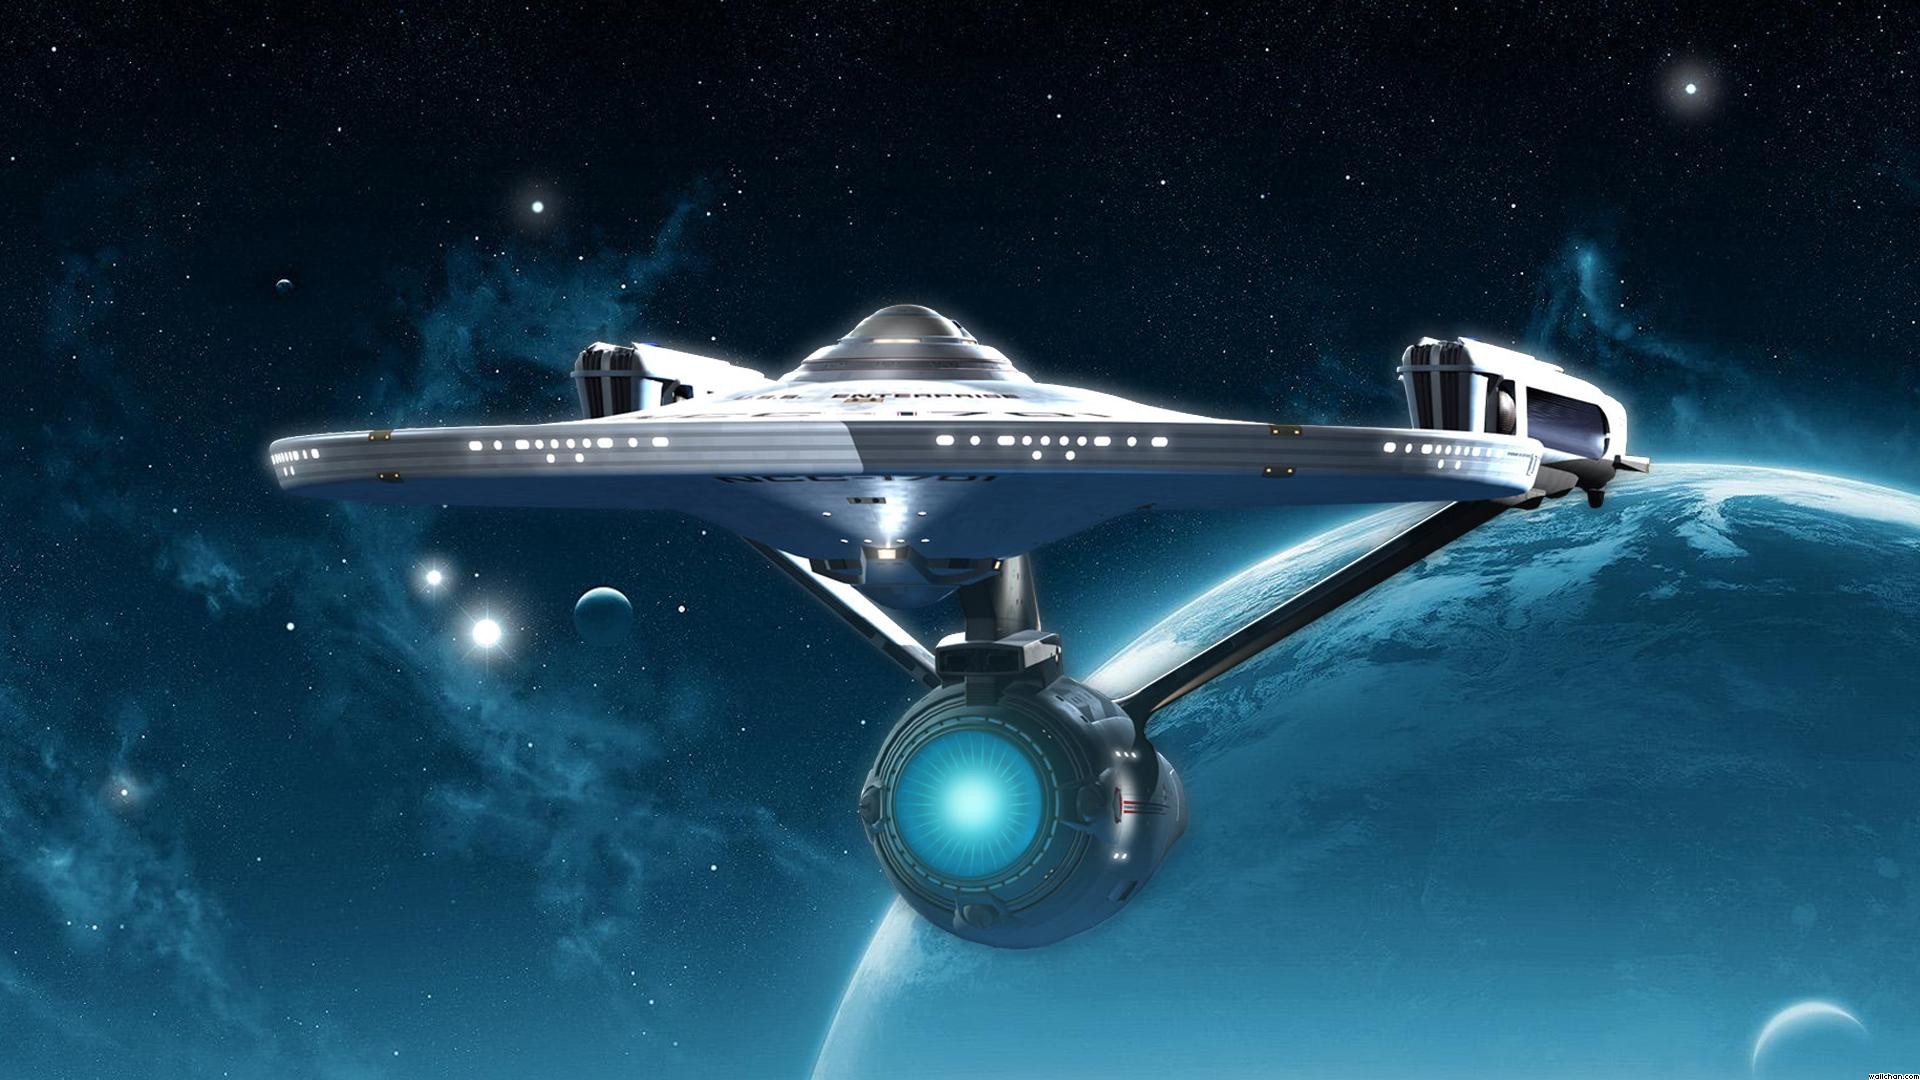 Star Trek Enterprise Wallpaper HD Image